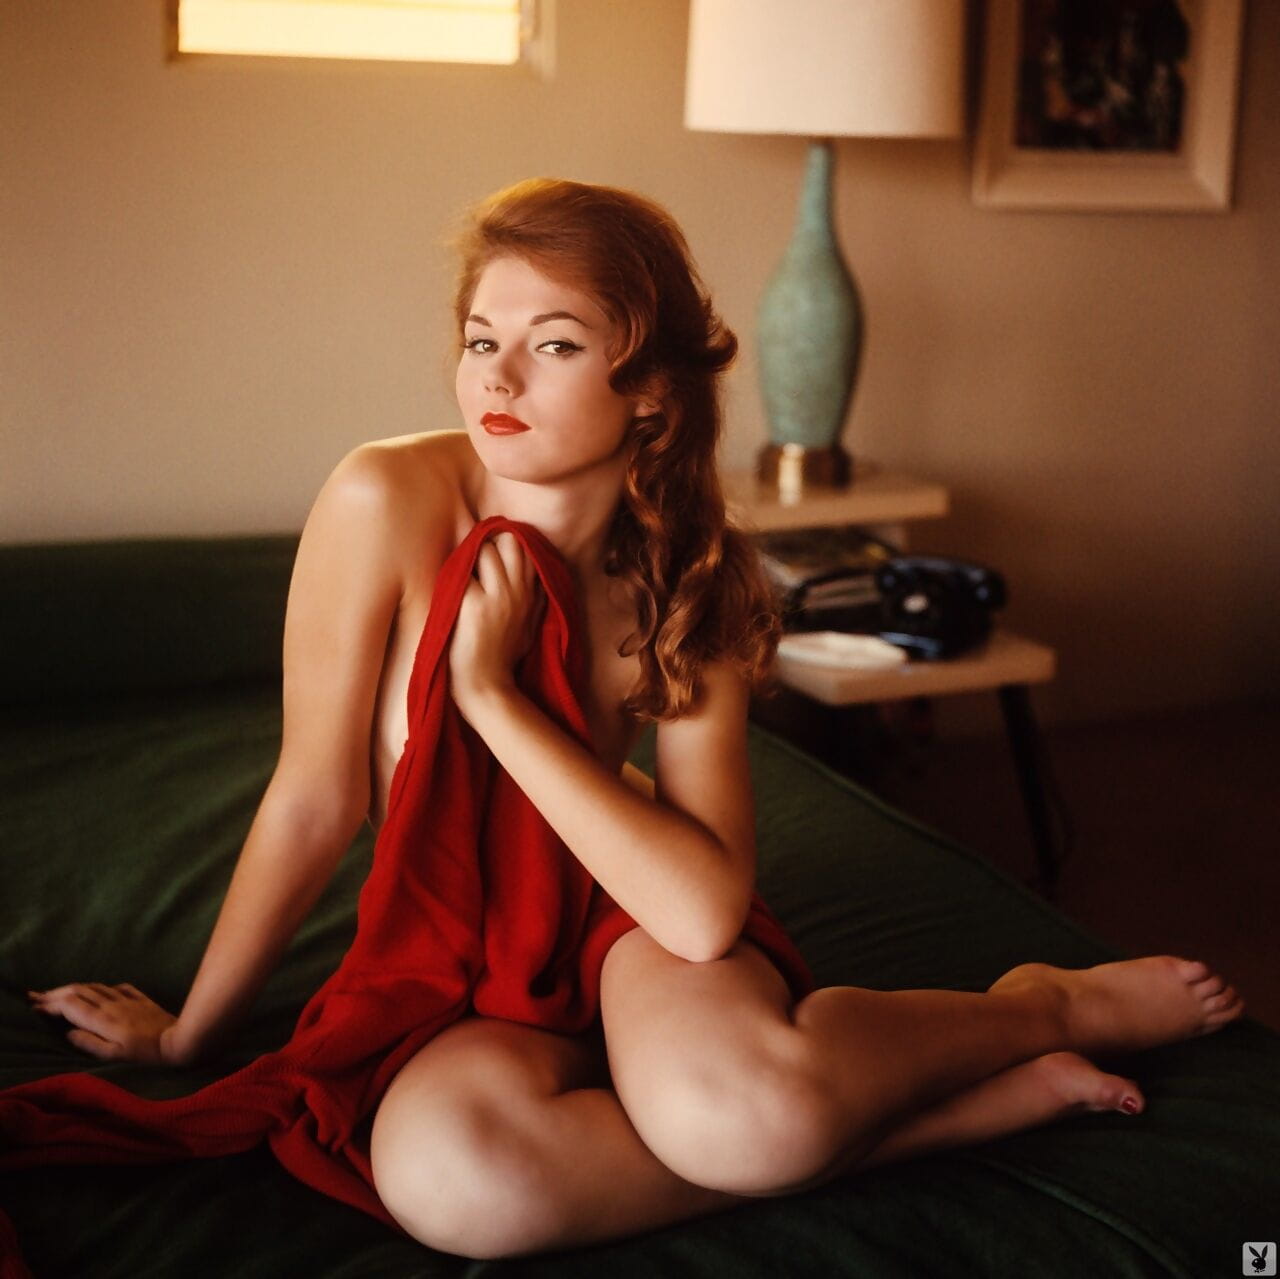 milf Kathy douglas expõe ela linda natural curvas durante Vintage Sessão de fotos